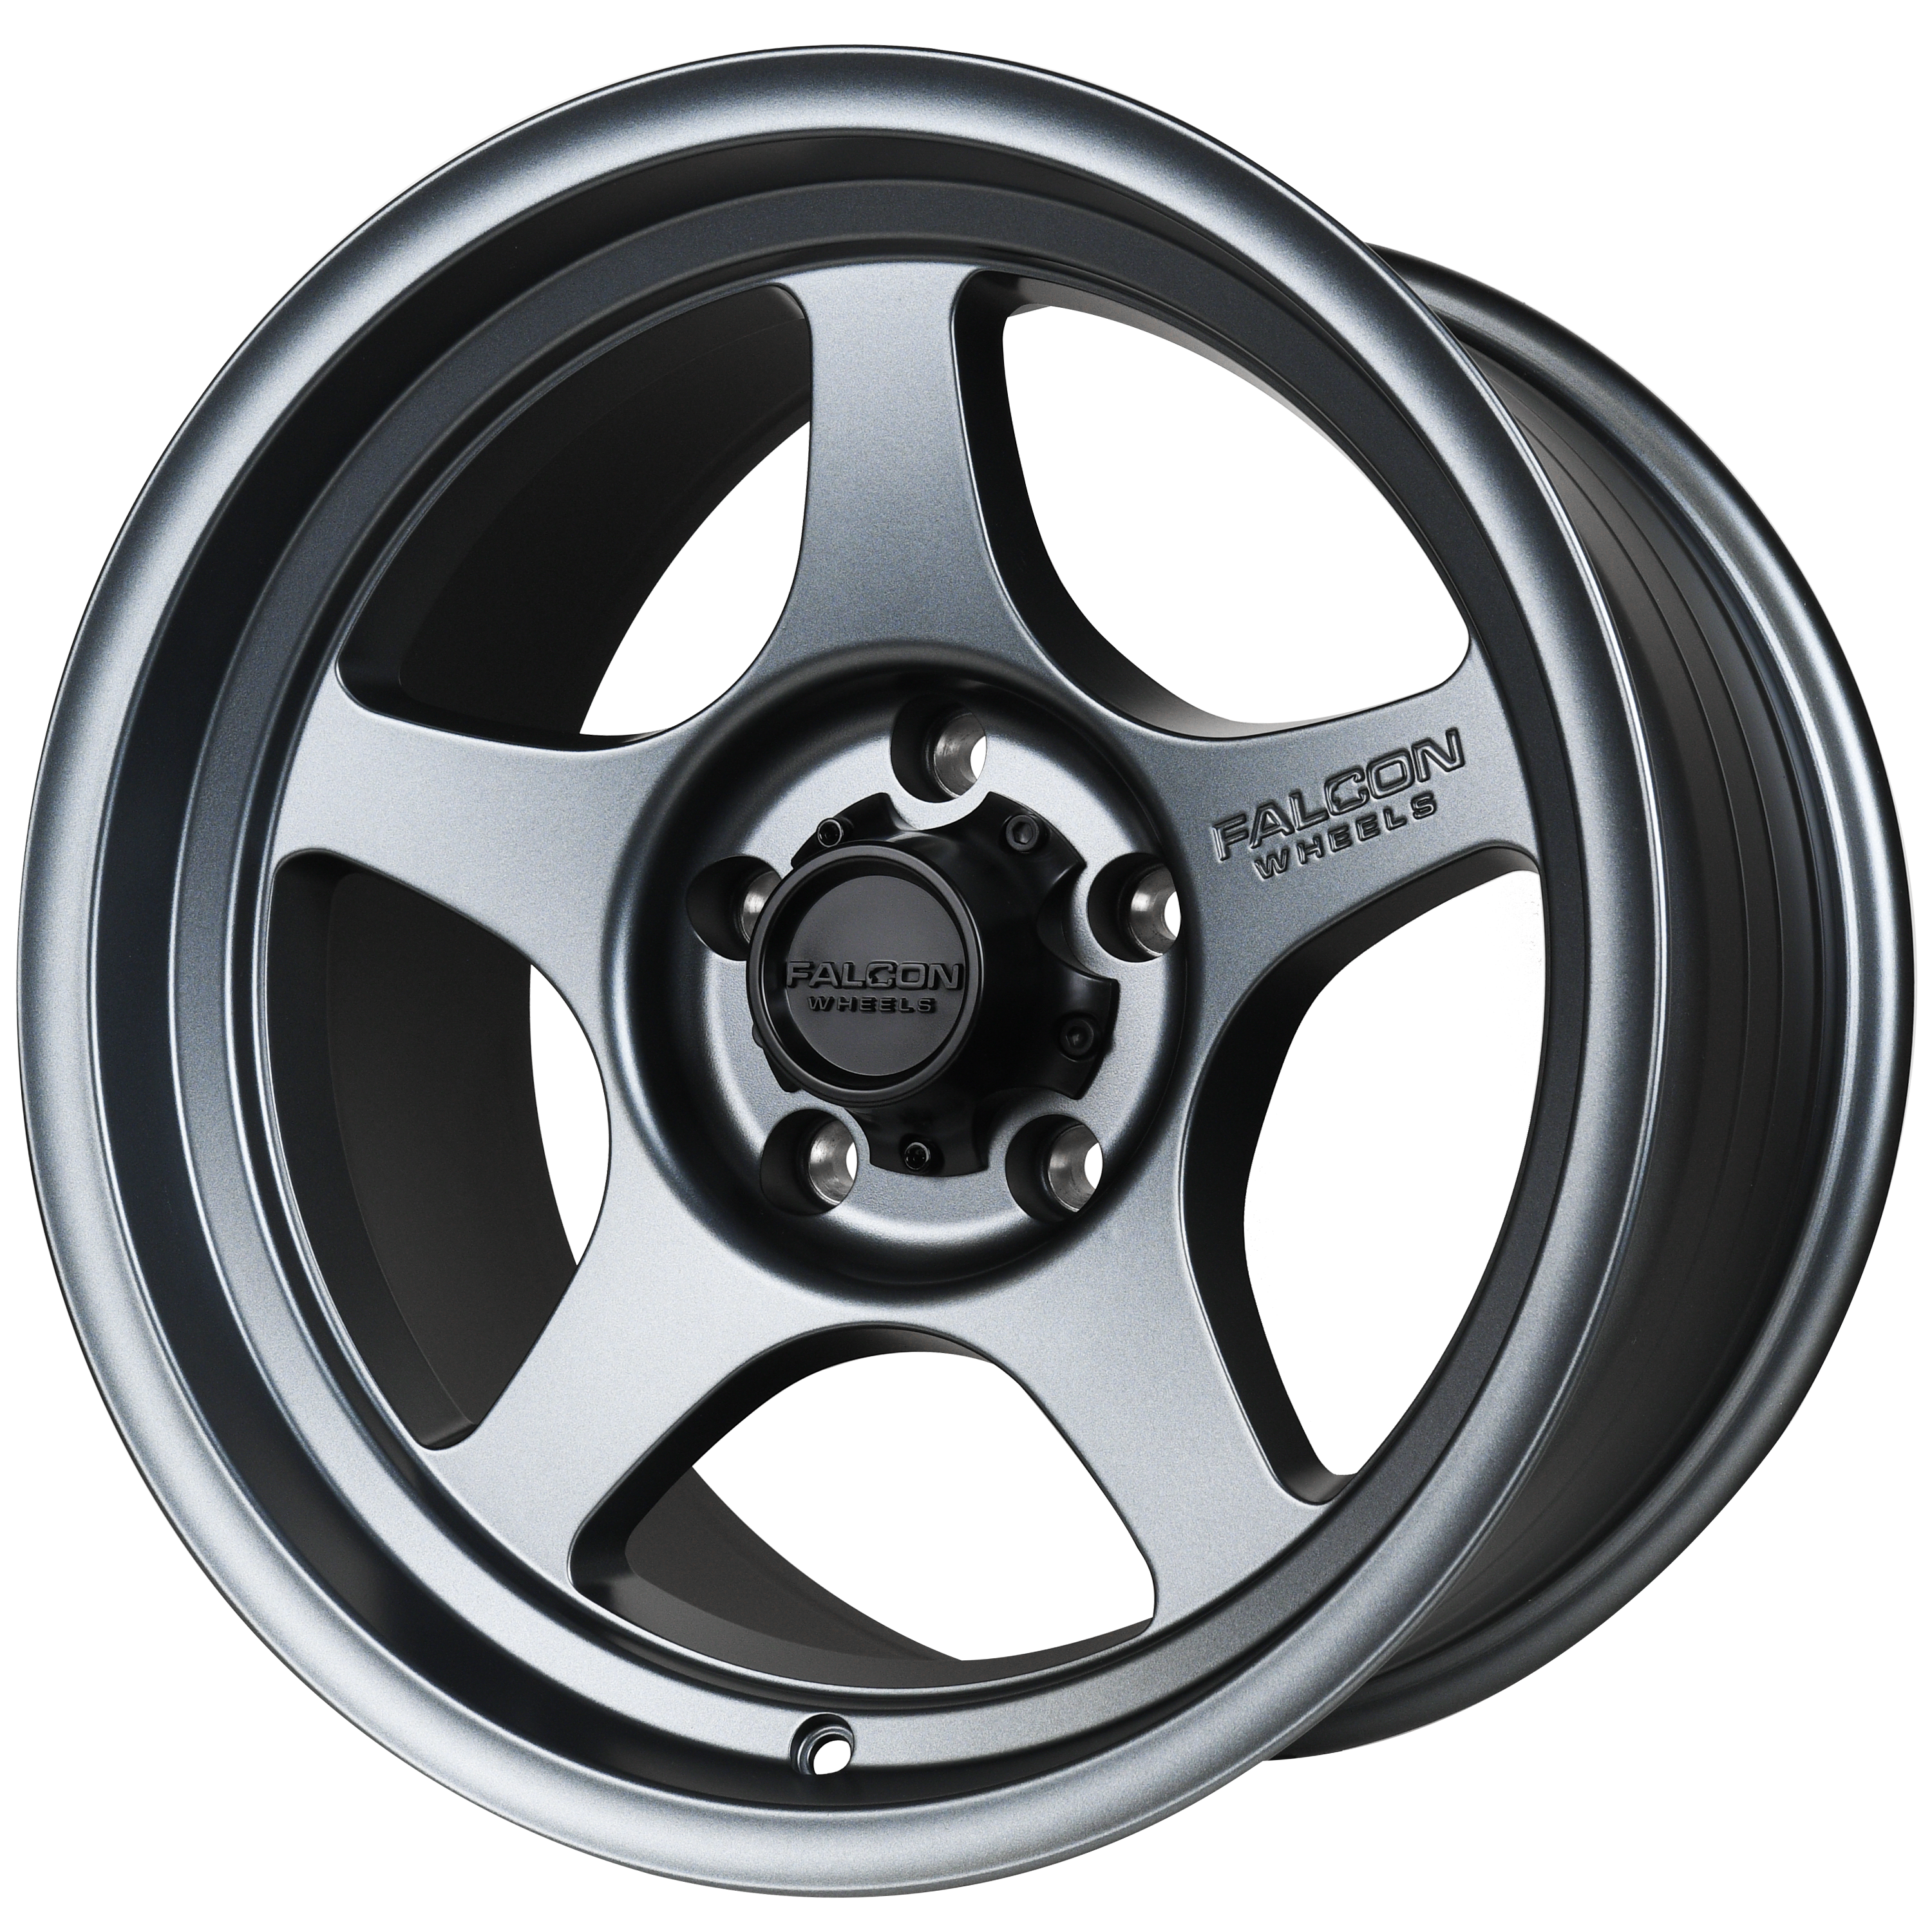 T2 - Matte Gunmetal 17x9 - Premium Wheels from Falcon Off-Road Wheels - Just $270! Shop now at Falcon Off-Road Wheels 